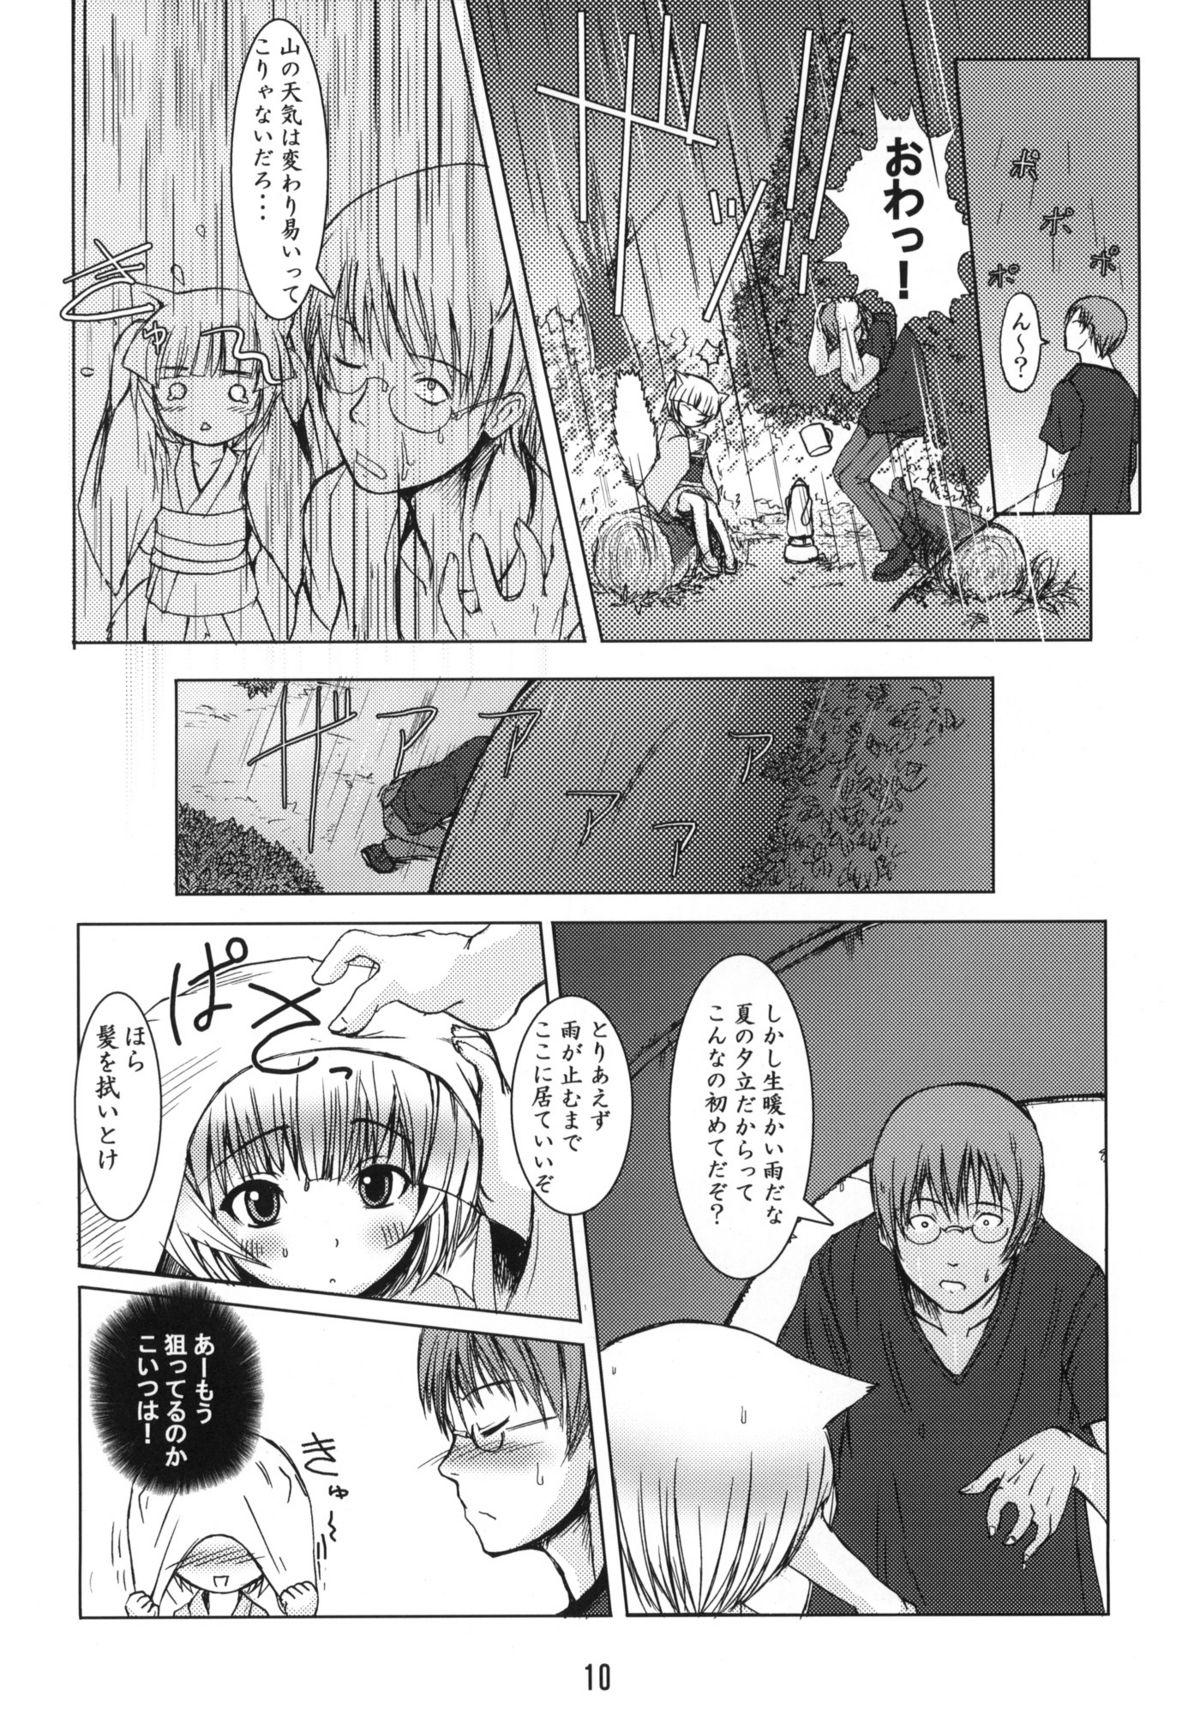 18 Year Old Byakko no Mori Blowjob - Page 9